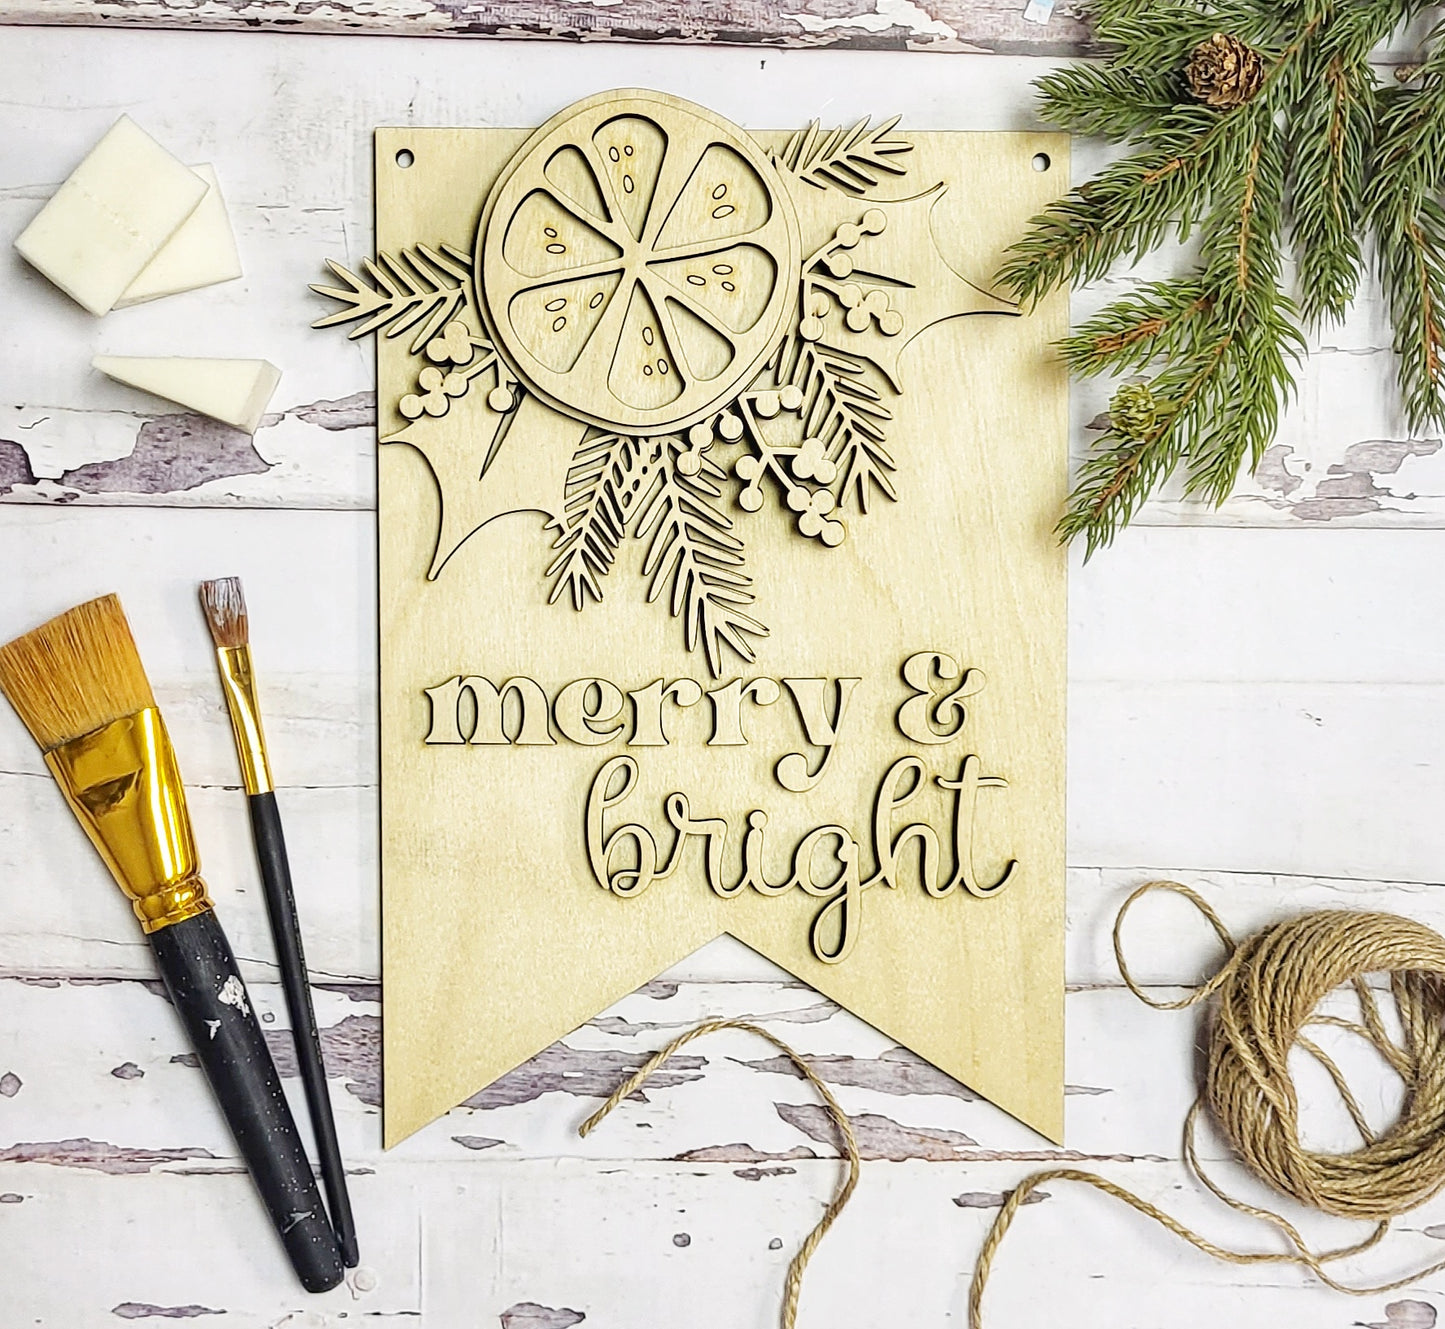 Merry & Bright - Ready to Paint Sign 10.75 x 7.25" Door Hanger